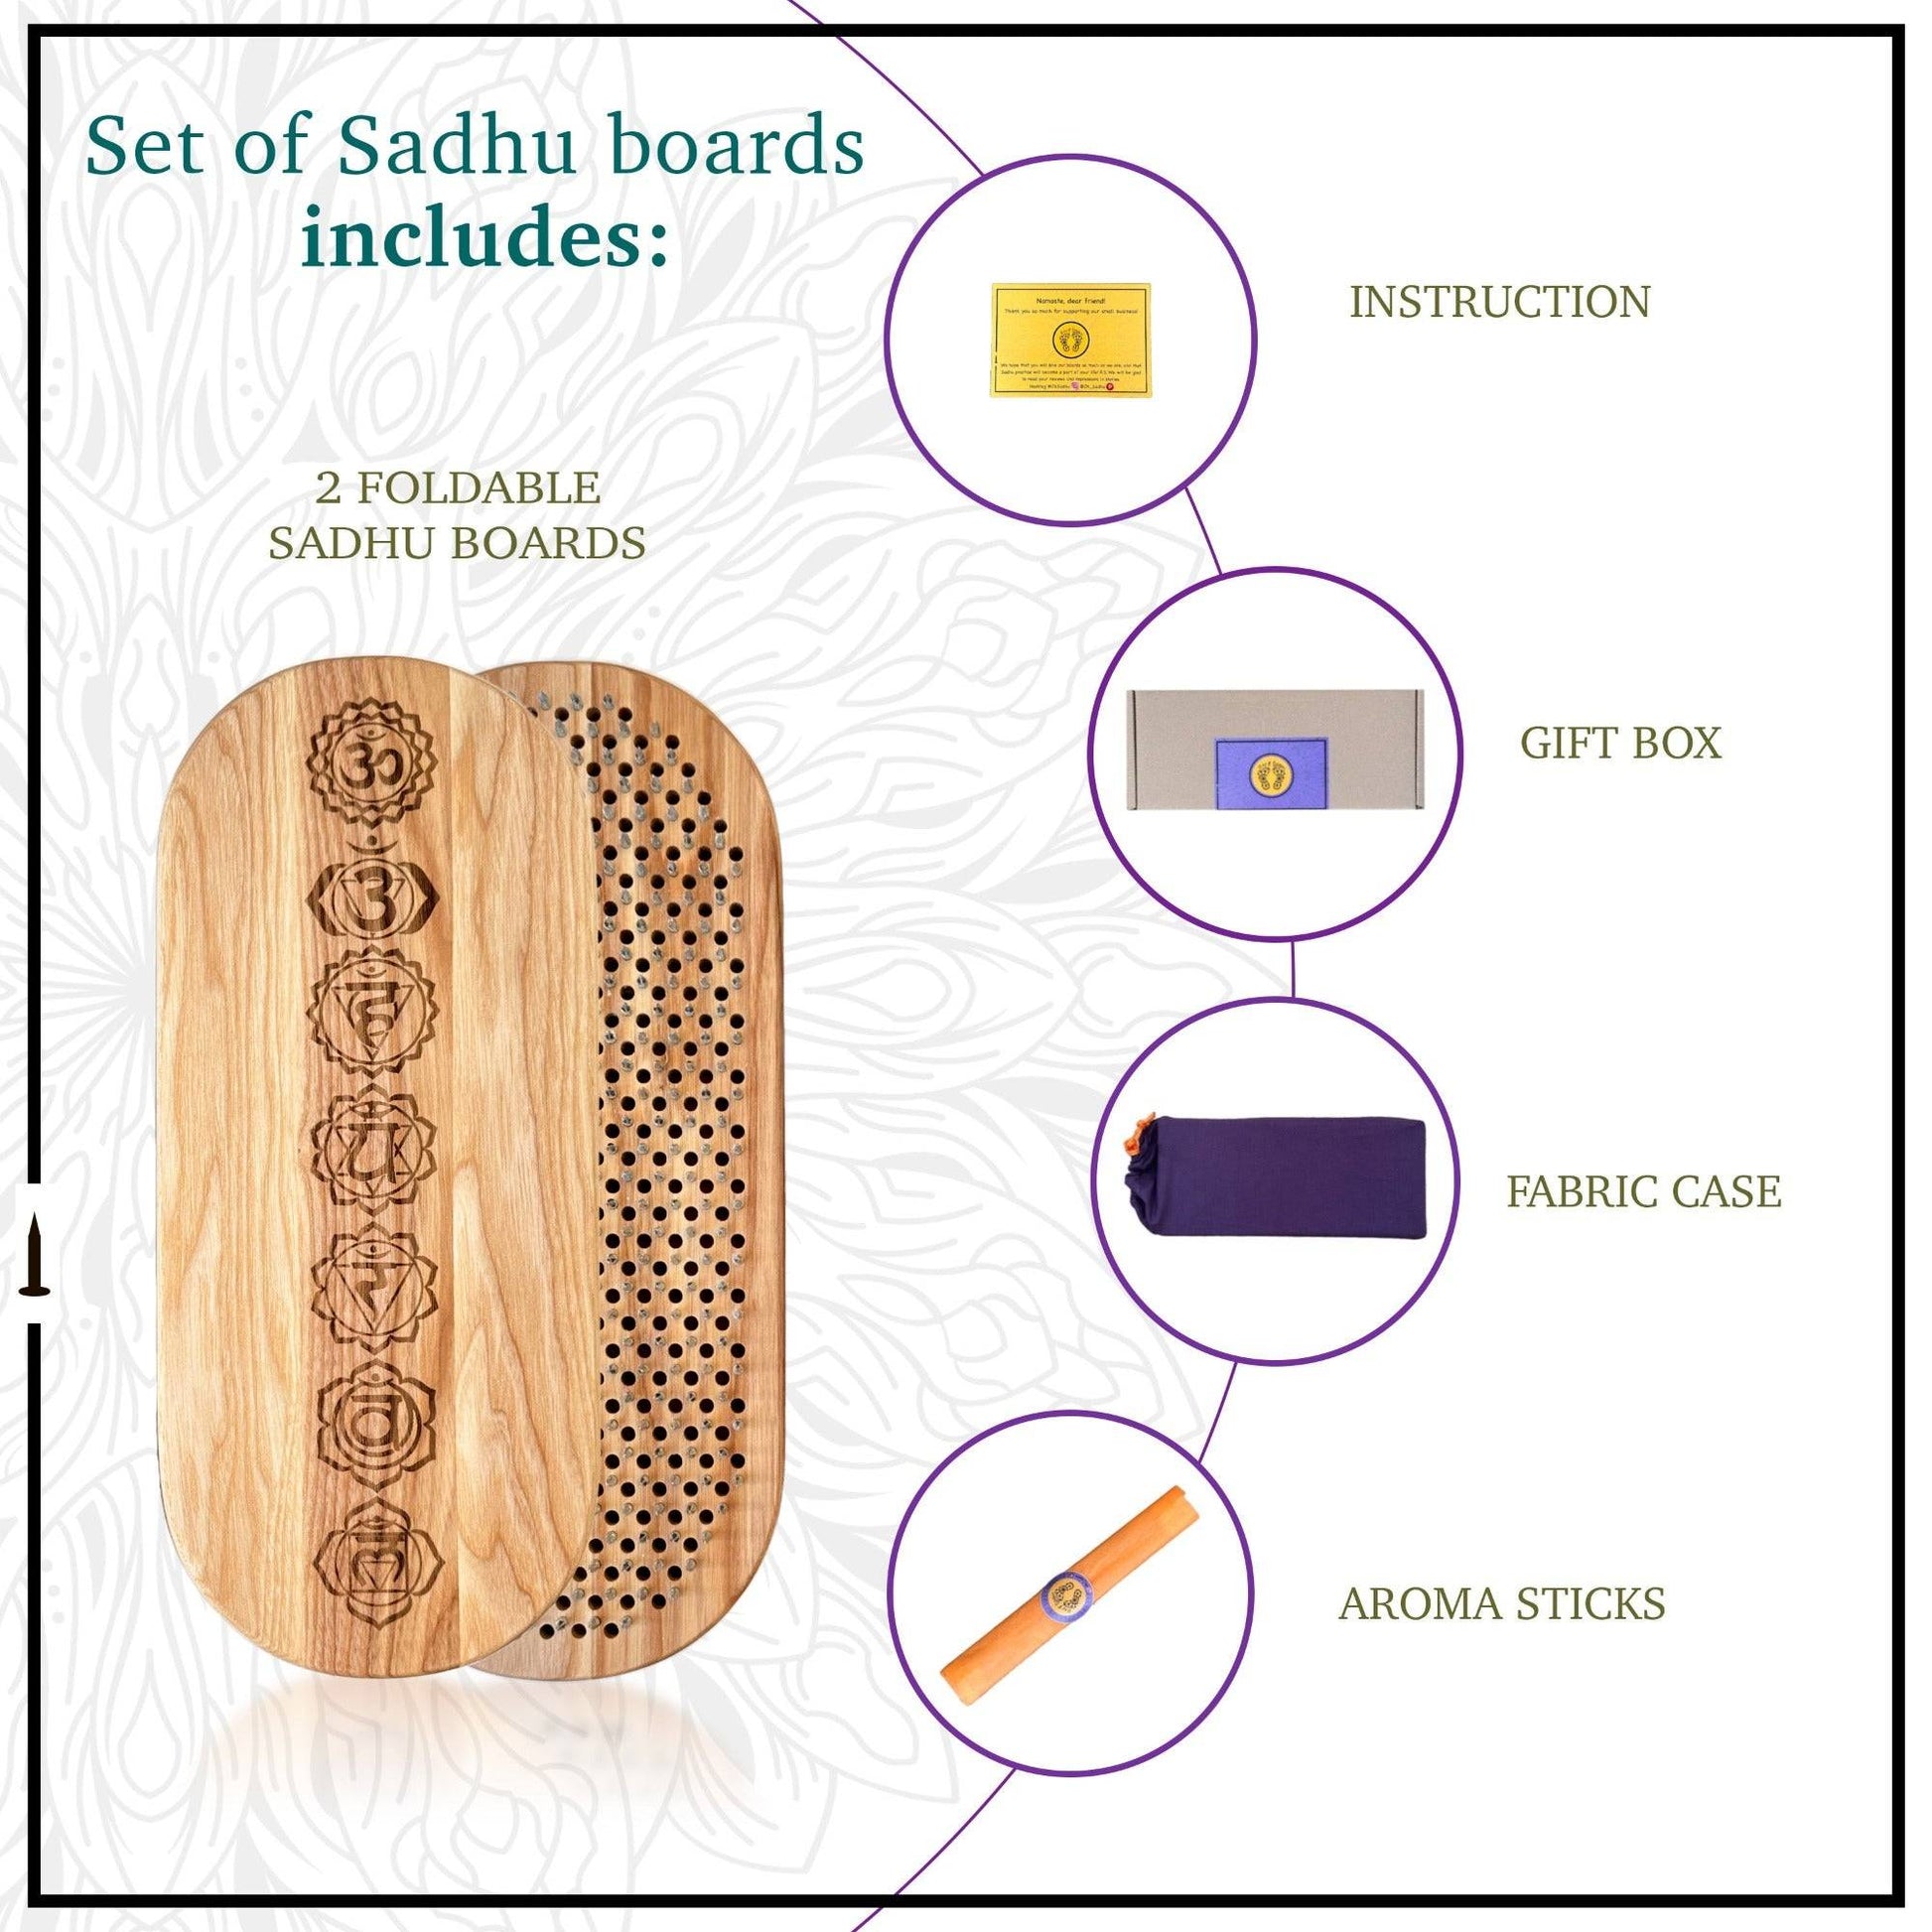 Sadhu board set include gift box, storage case, instruction, aroma sticks